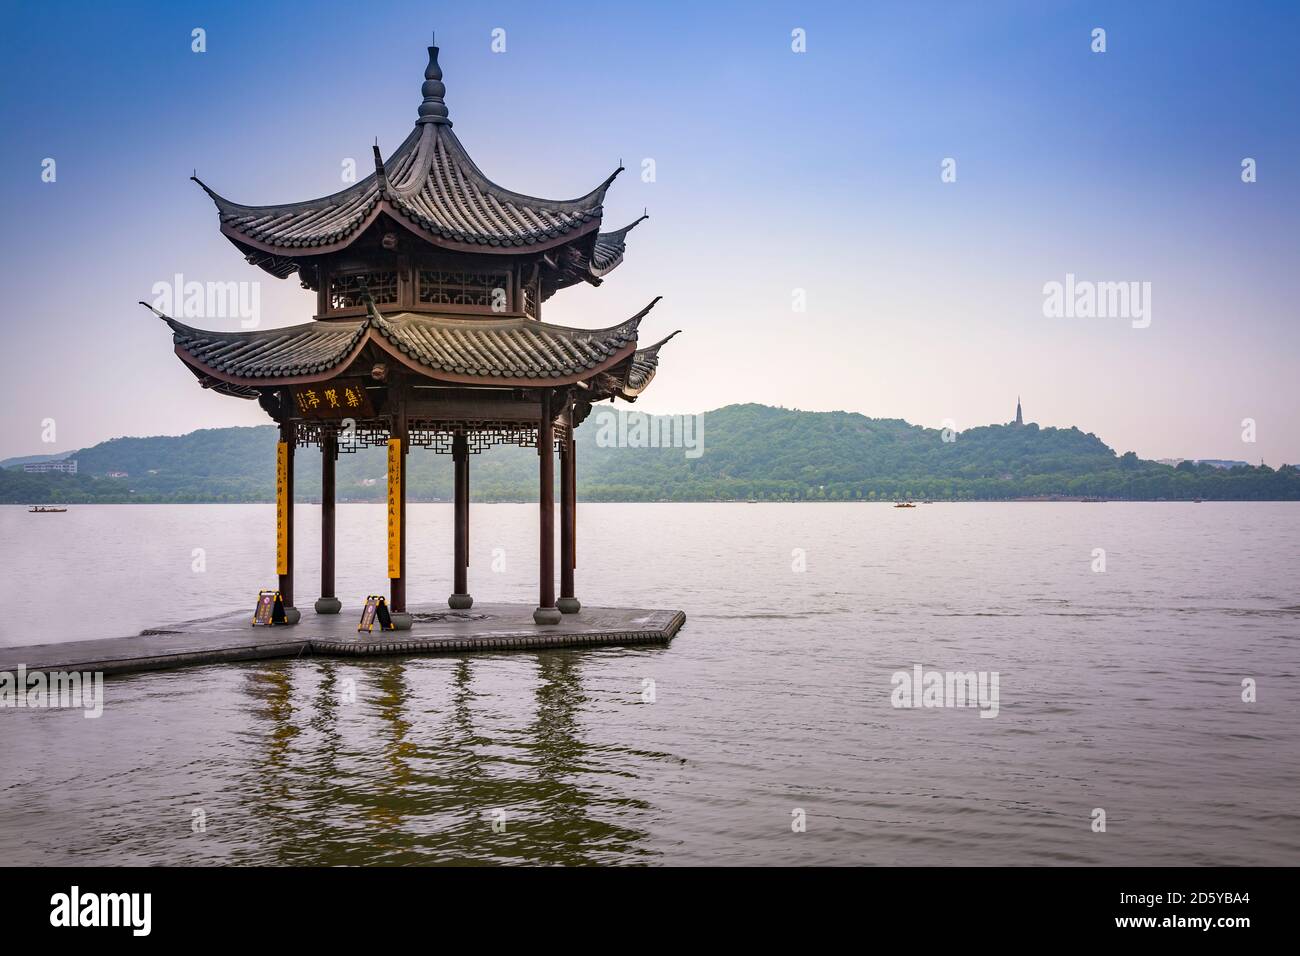 China, Zhejiang, Hangzhou, Traditional pavilion at the West lake Stock Photo